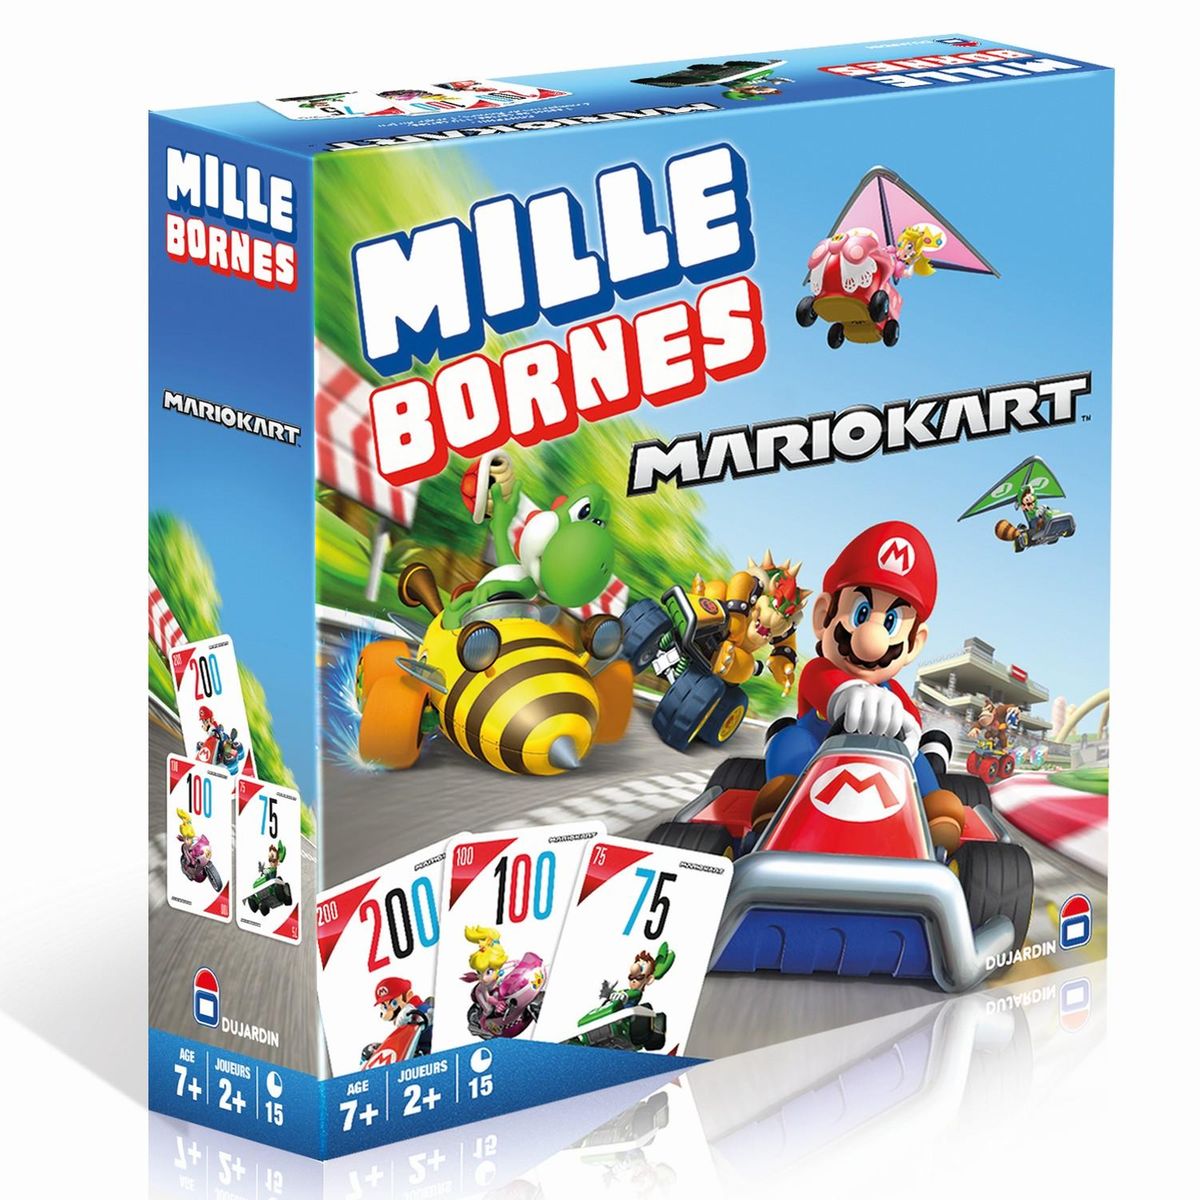 Jeux 1000 Bornes  Mario Kart  Dujardin/Nintendo 2018 sous blister - Label  Emmaüs